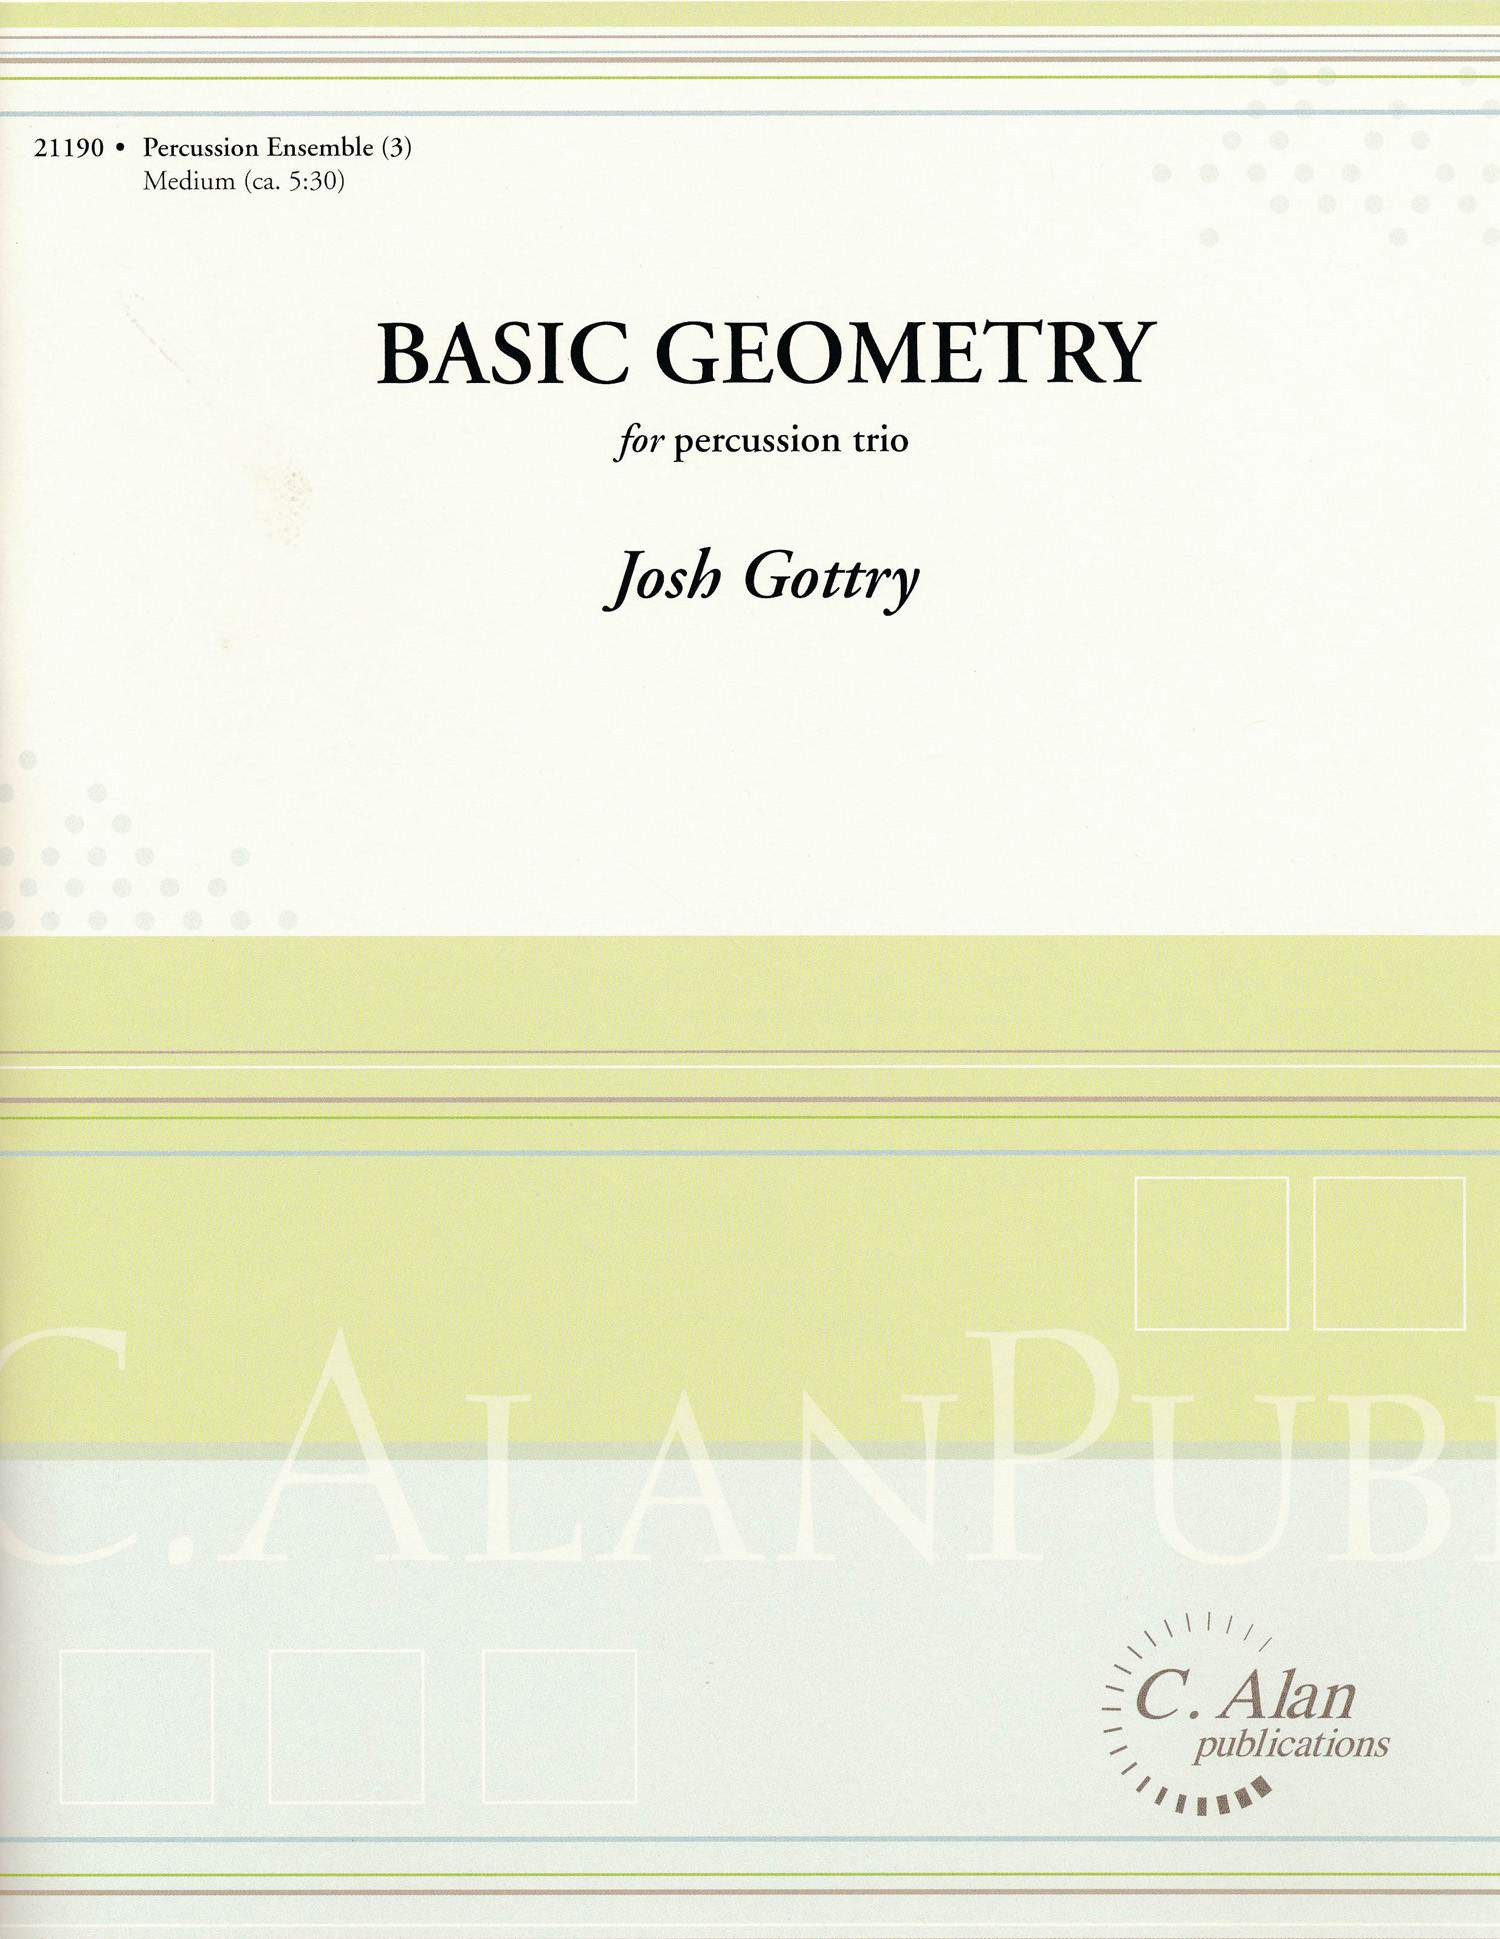 Basic Geometry by Josh Gottry